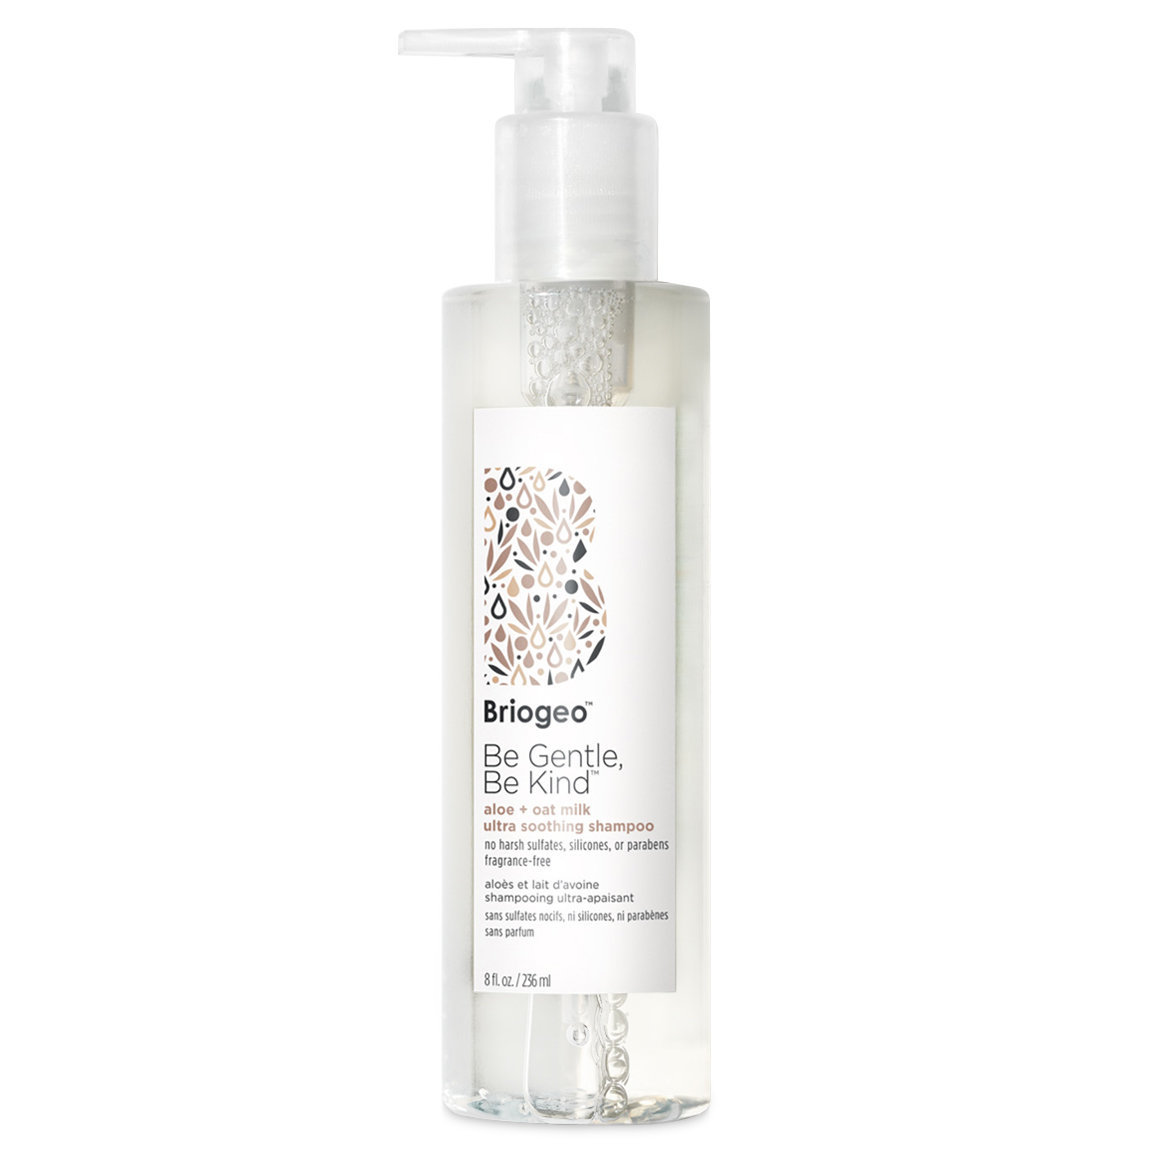 Briogeo Be Gentle, Be Kind Aloe + Oat Milk Ultra Soothing Fragrance-Free Shampoo alternative view 1 - product swatch.